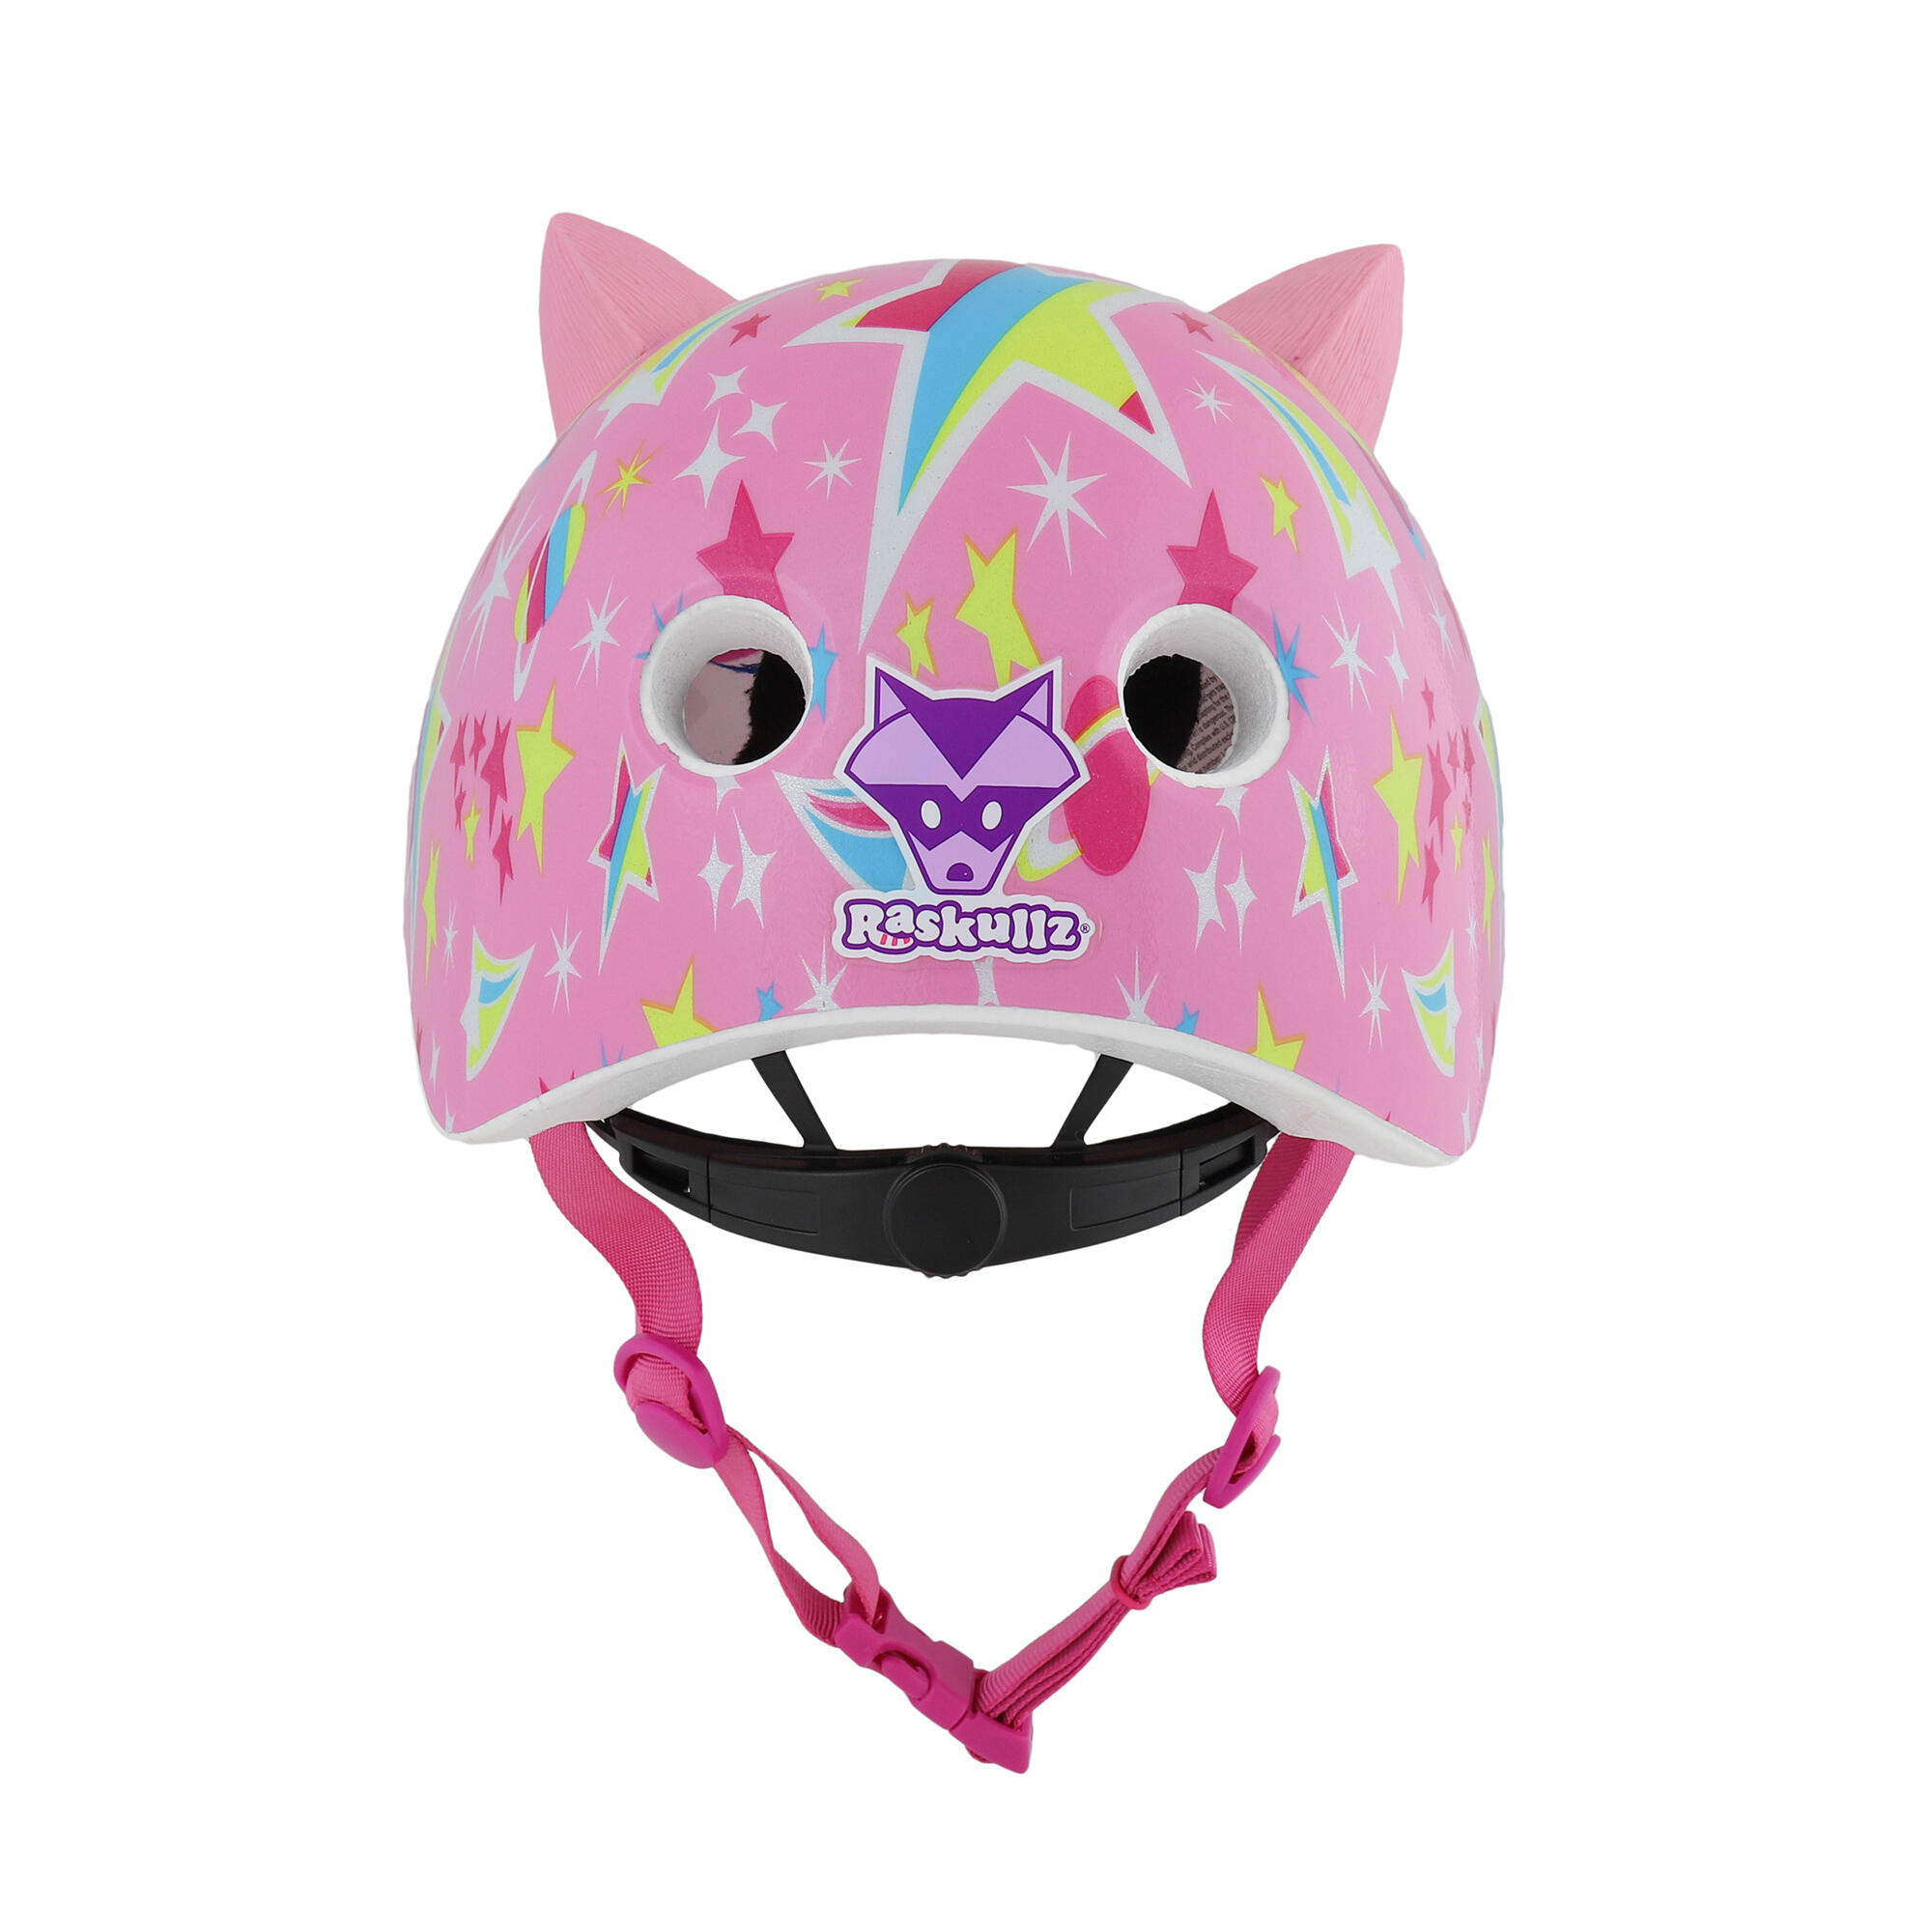 Raskullz FS Toddlers Helmet - Astro Cat Pink Astro Cat Pink Unisize 48-52cm 3/5